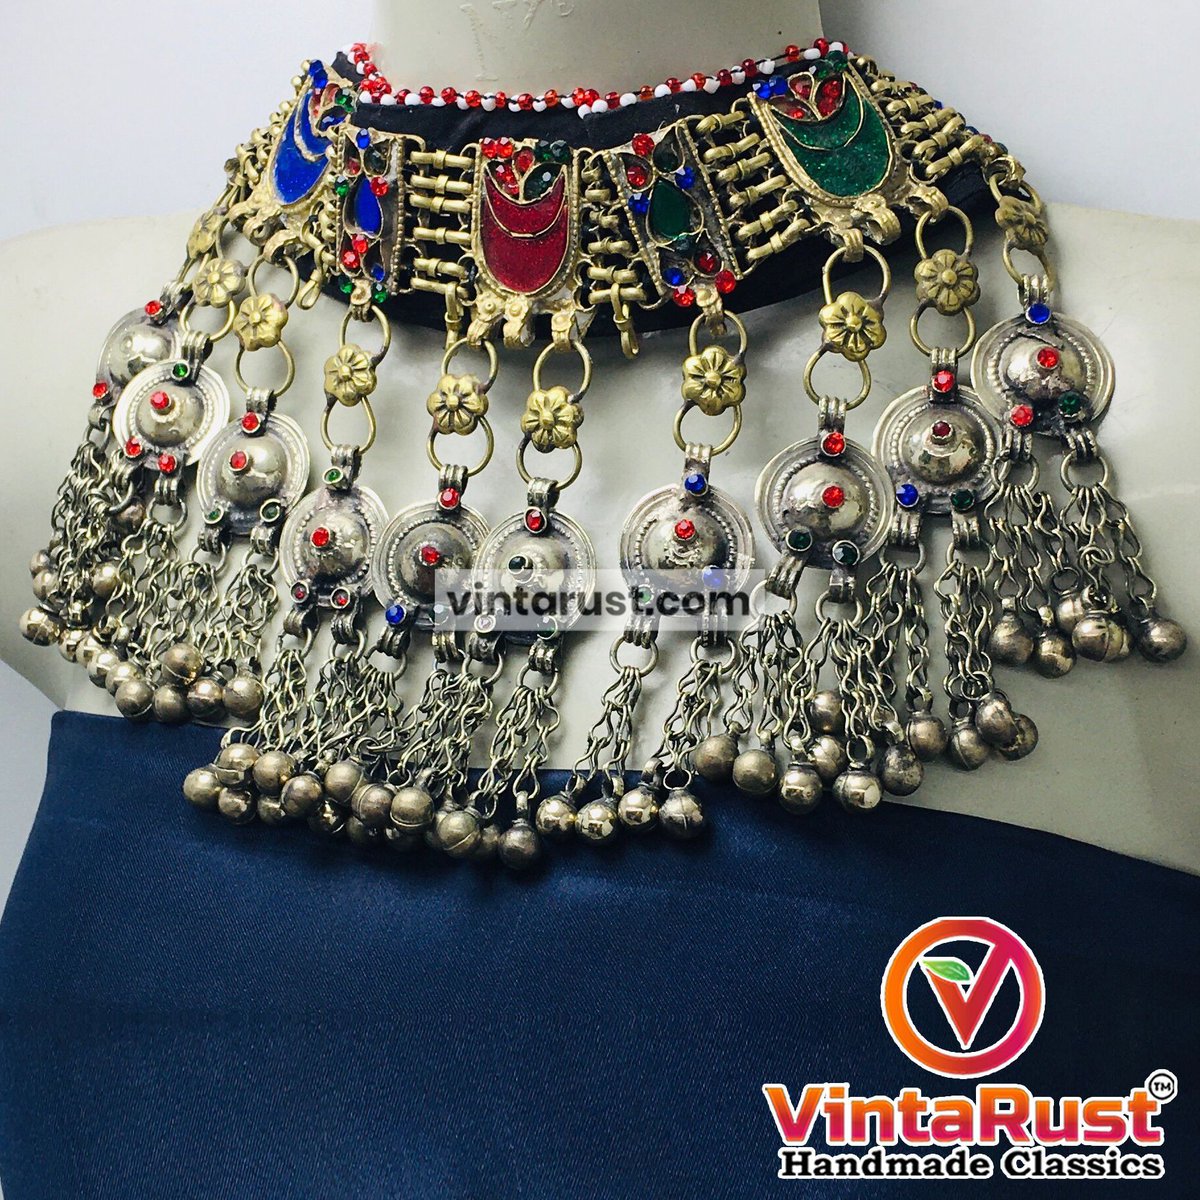 Vintage Handcrafted Choker Necklace.

Shop Now: buff.ly/3qaVhOD

#VintageJewelry #Handcrafted #ChokerNecklace #TimelessElegance #OldWorldGlamour #StatementPiece #FashionStatement #ShopSmallBusiness #JewelryObsessed #FashionistaFaves #InstaFashion #Vintarust